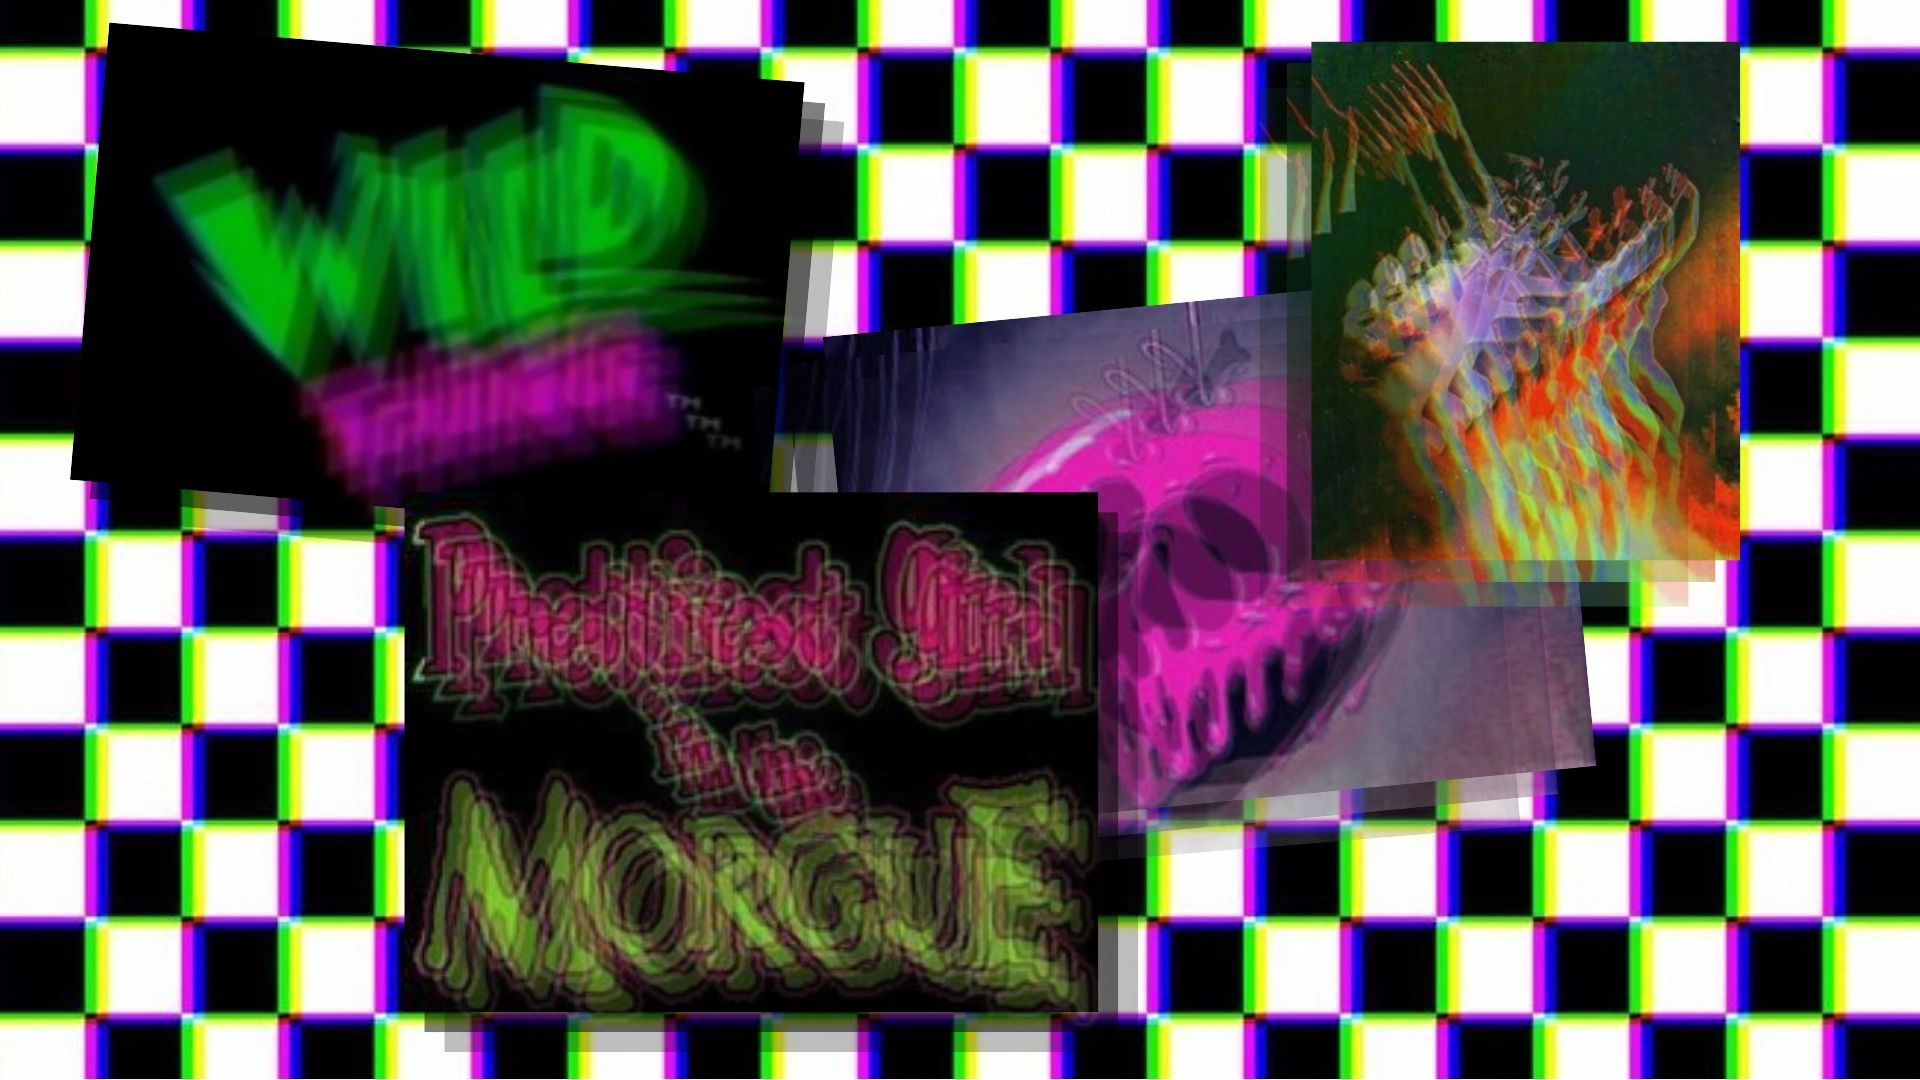 Grunge Aesthetic Computer Wallpaper. Aesthetic grunge, Computer wallpaper, Grunge aesthetic